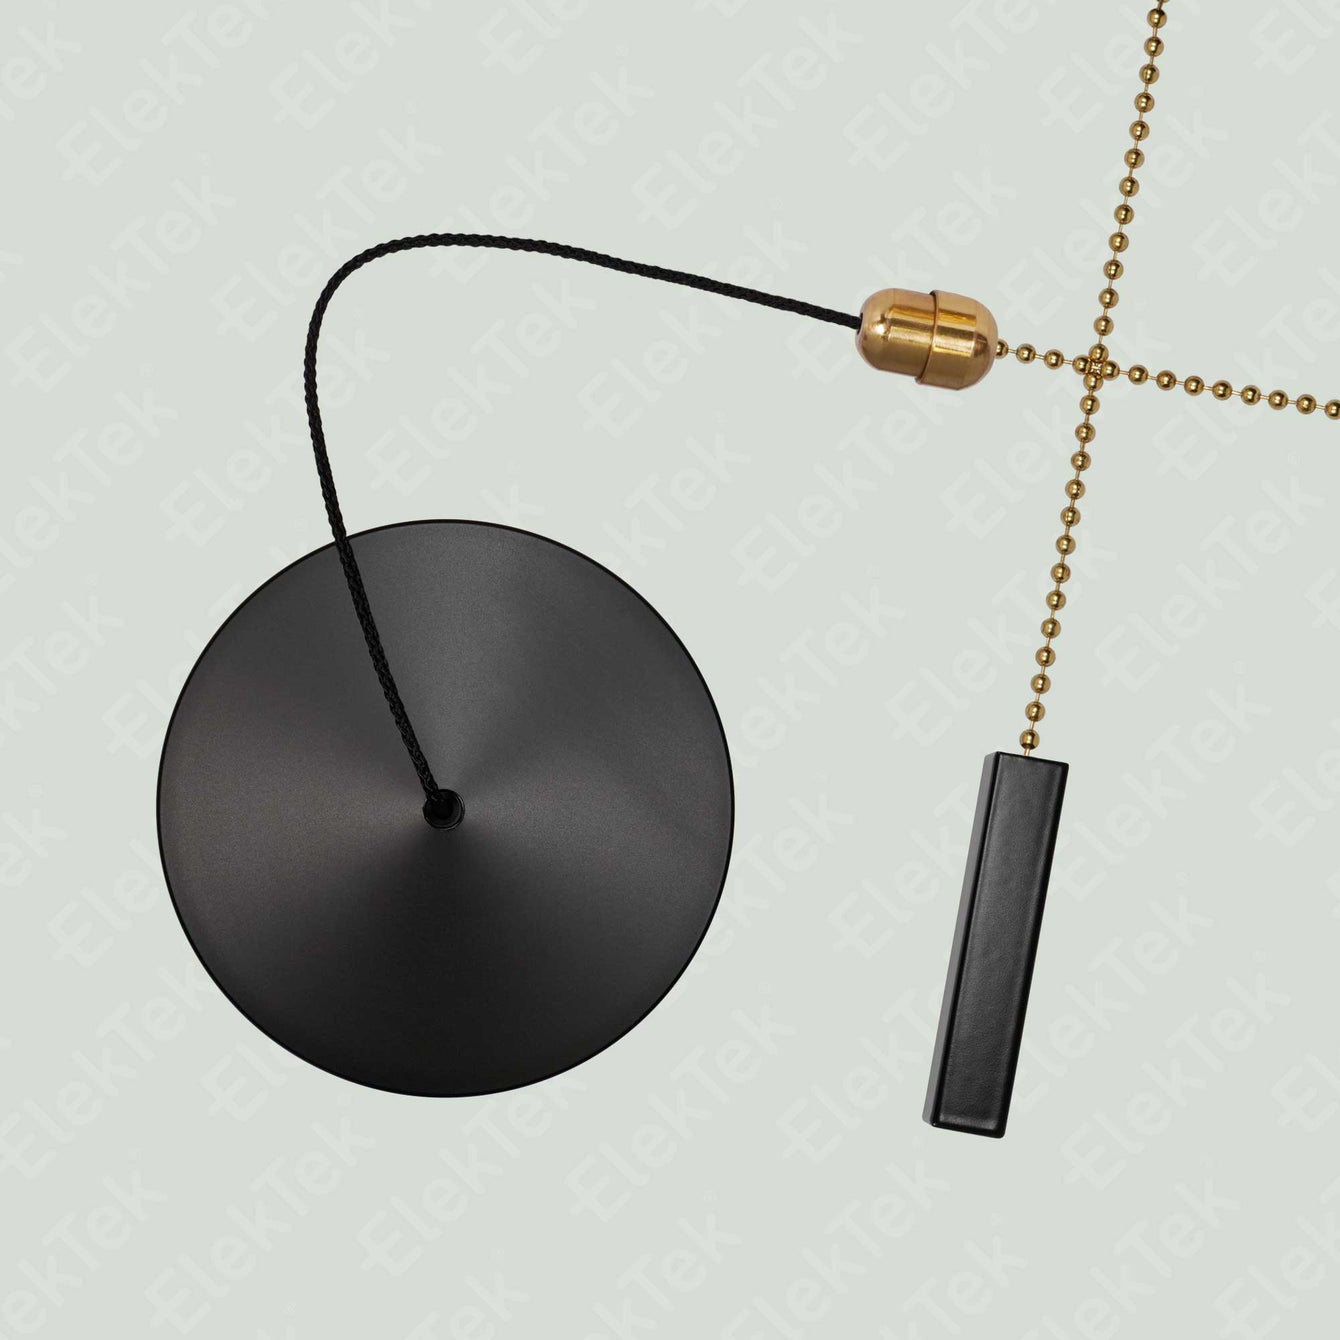 ElekTek Premium Matt Black Bathroom Light Pull Cord Switch Kit with Pull Chain Handle Black Cylinder / Brass